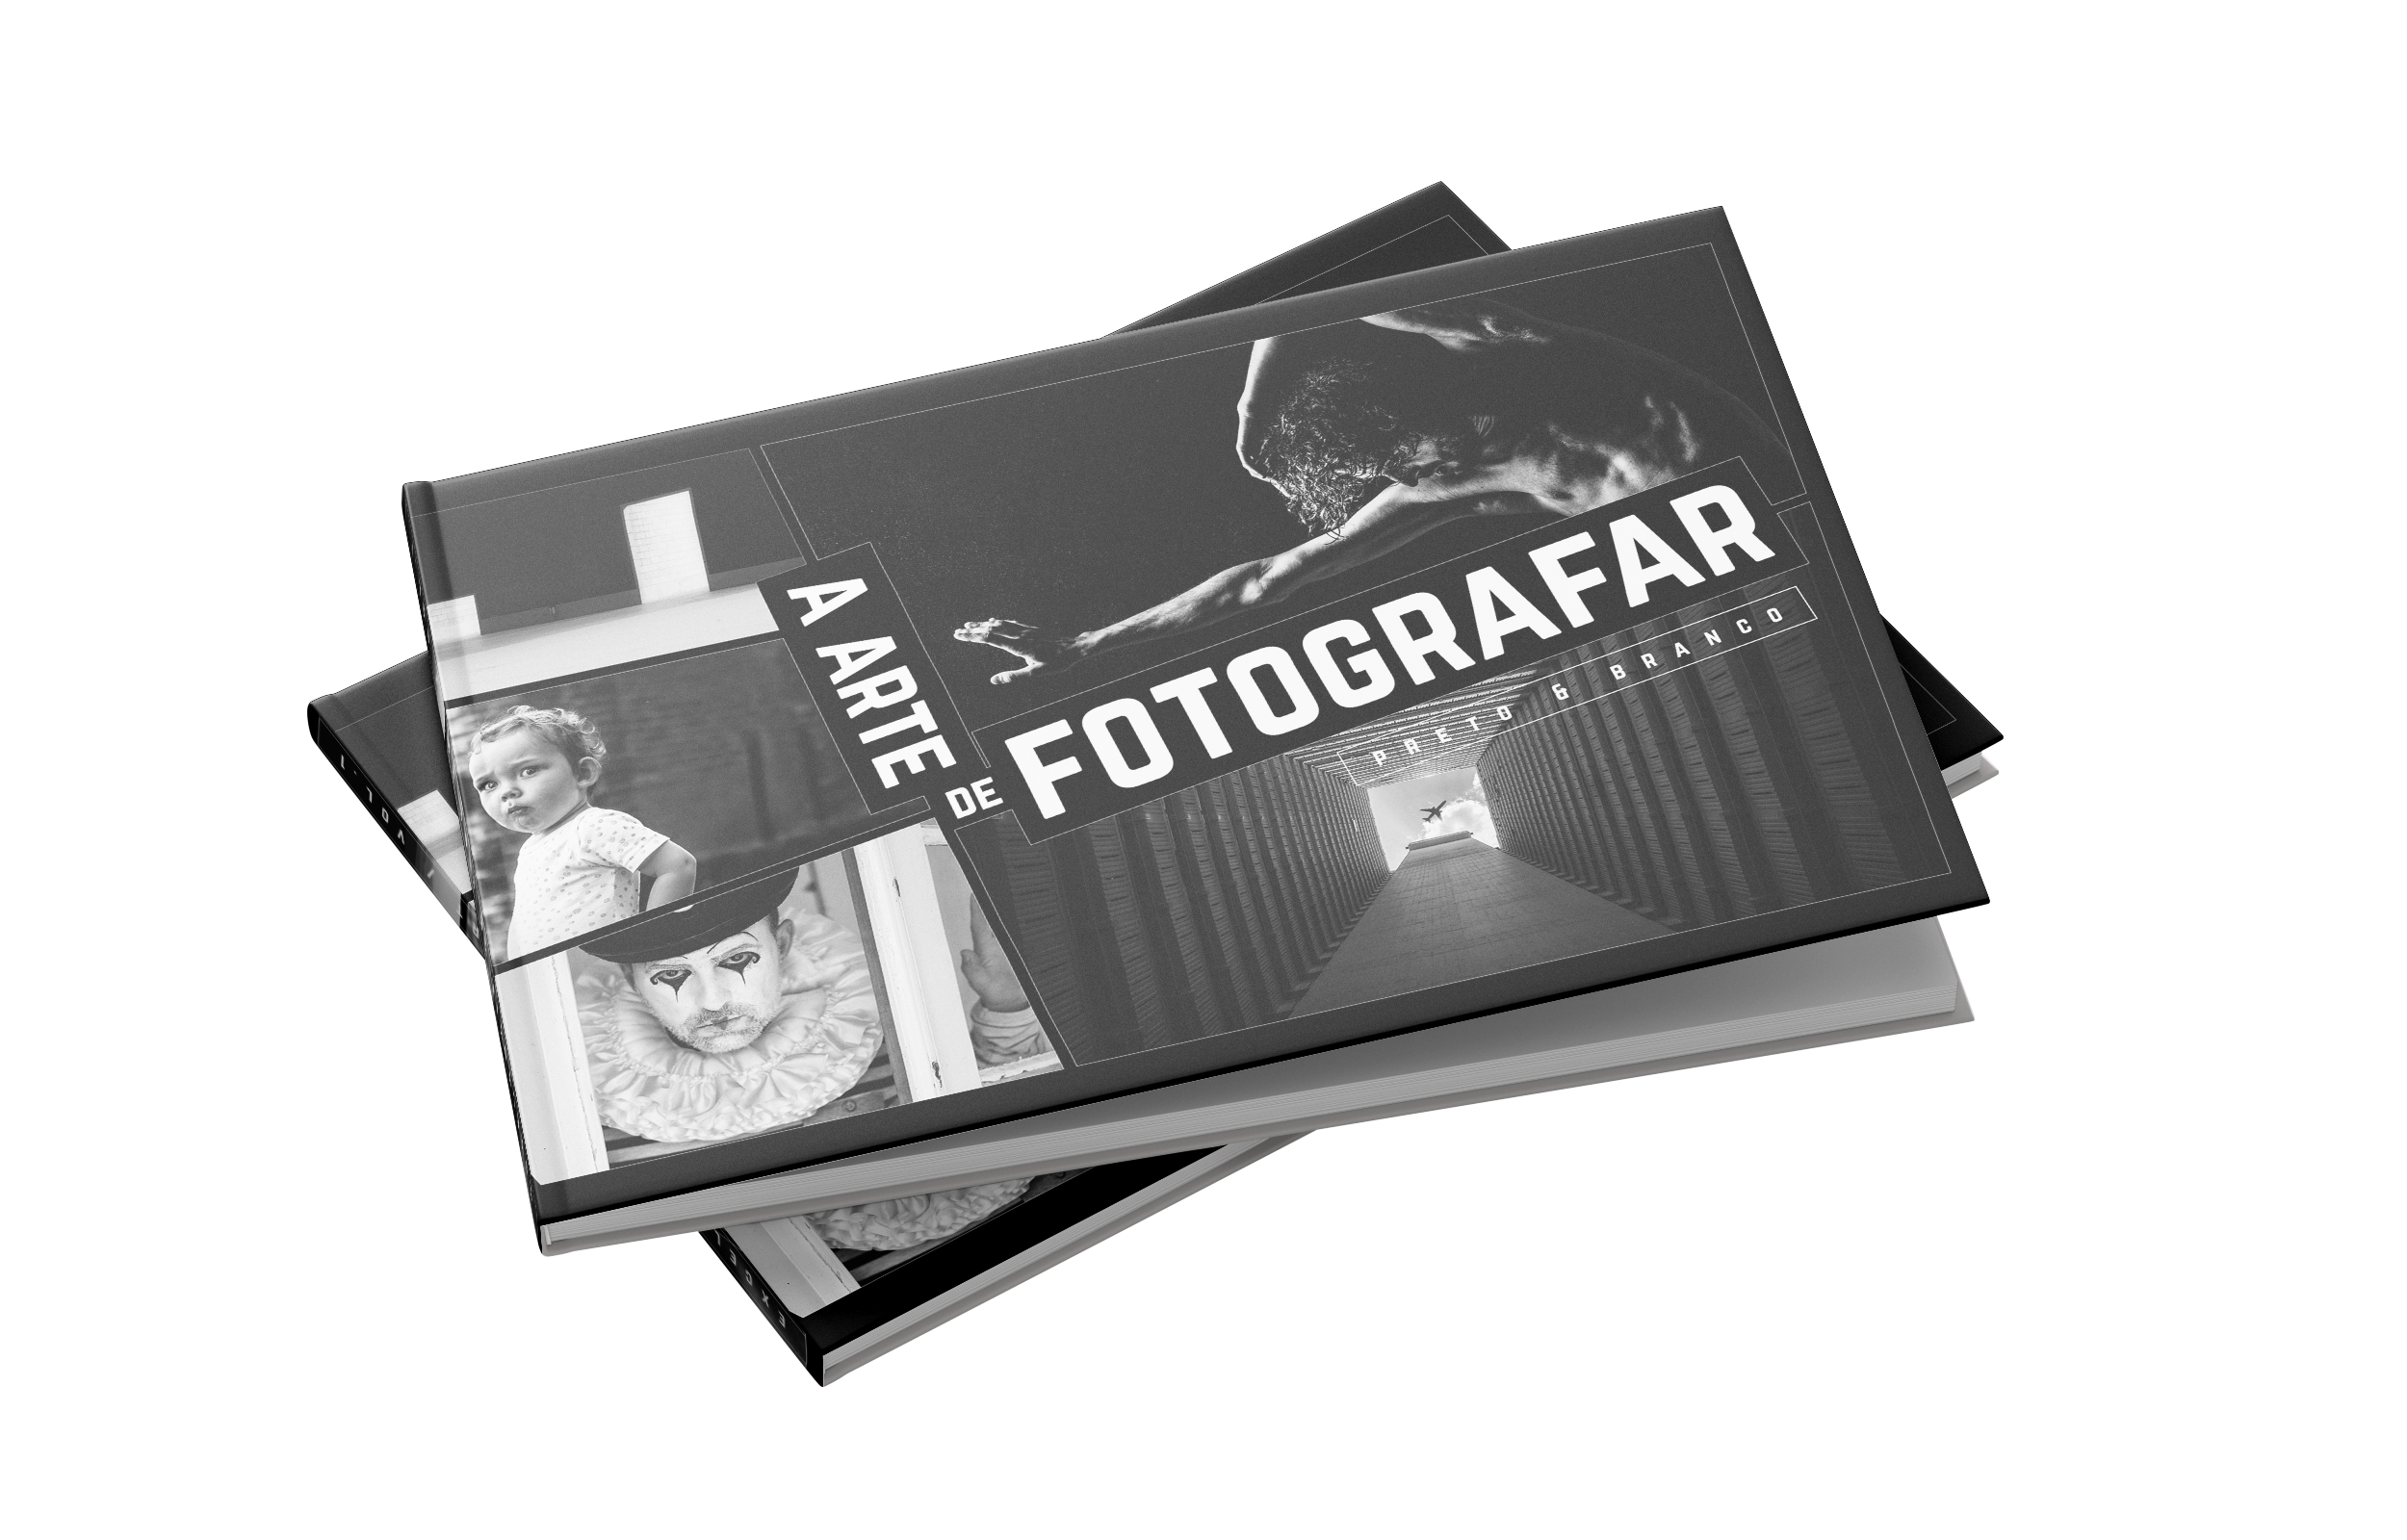 God-Publishing-Editora-Publicacoes-Colecoes-Fotografia-Arte-Publisher-Photography-Collections-Books-Arte-Fotografar-Preto-Branco-1-2